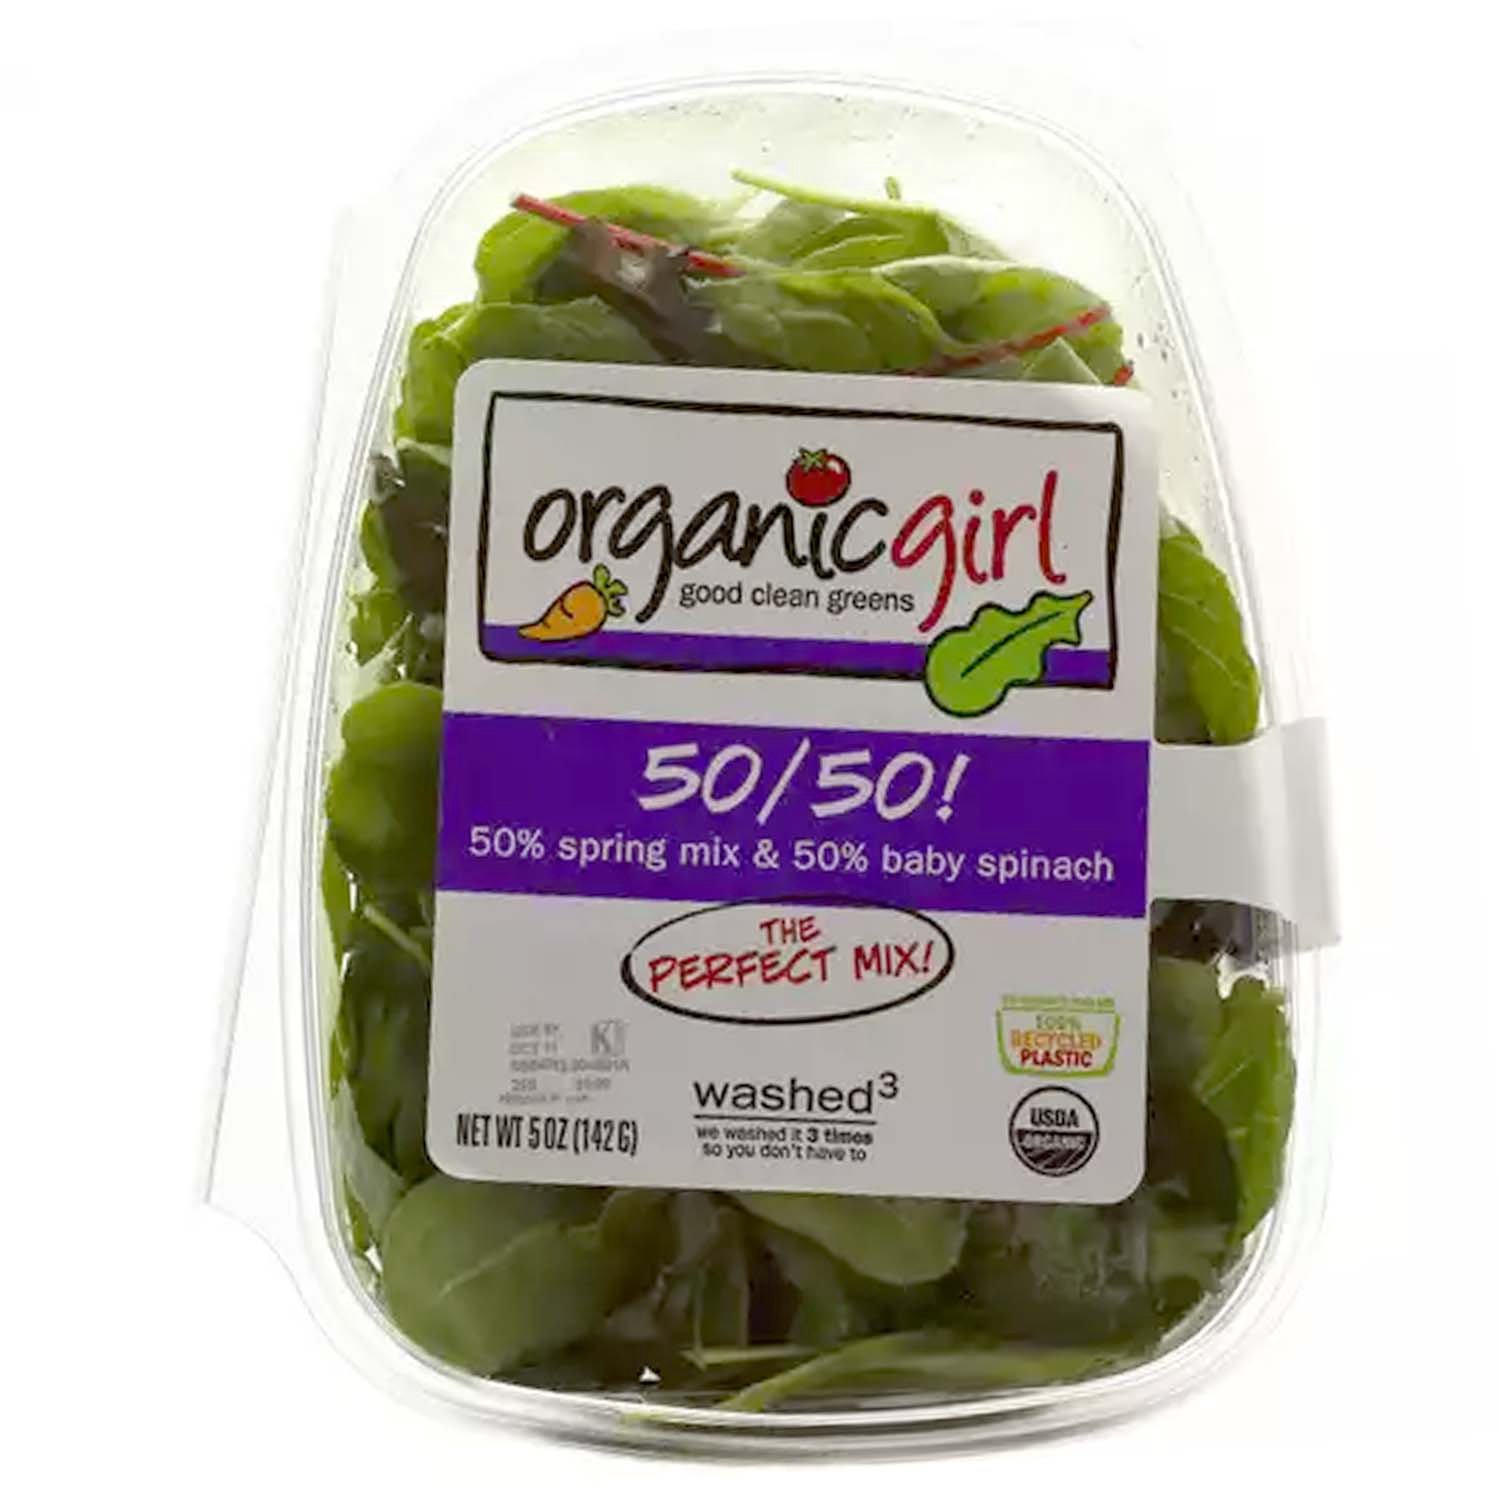 Organic Girl Little Gems, True Hearts